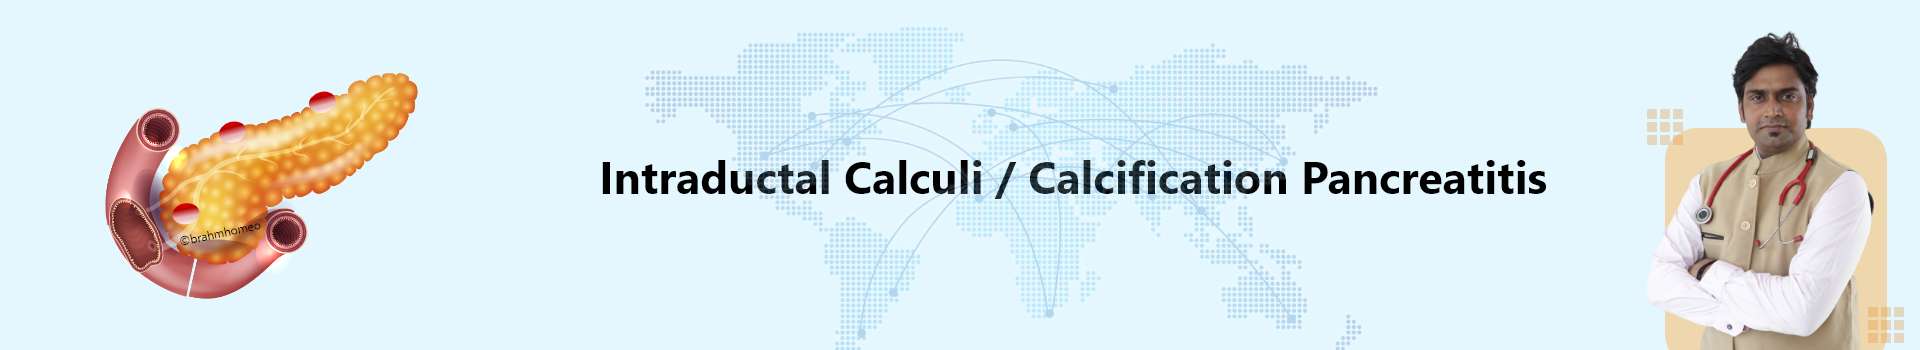 Intraductal Calculi/Calcification